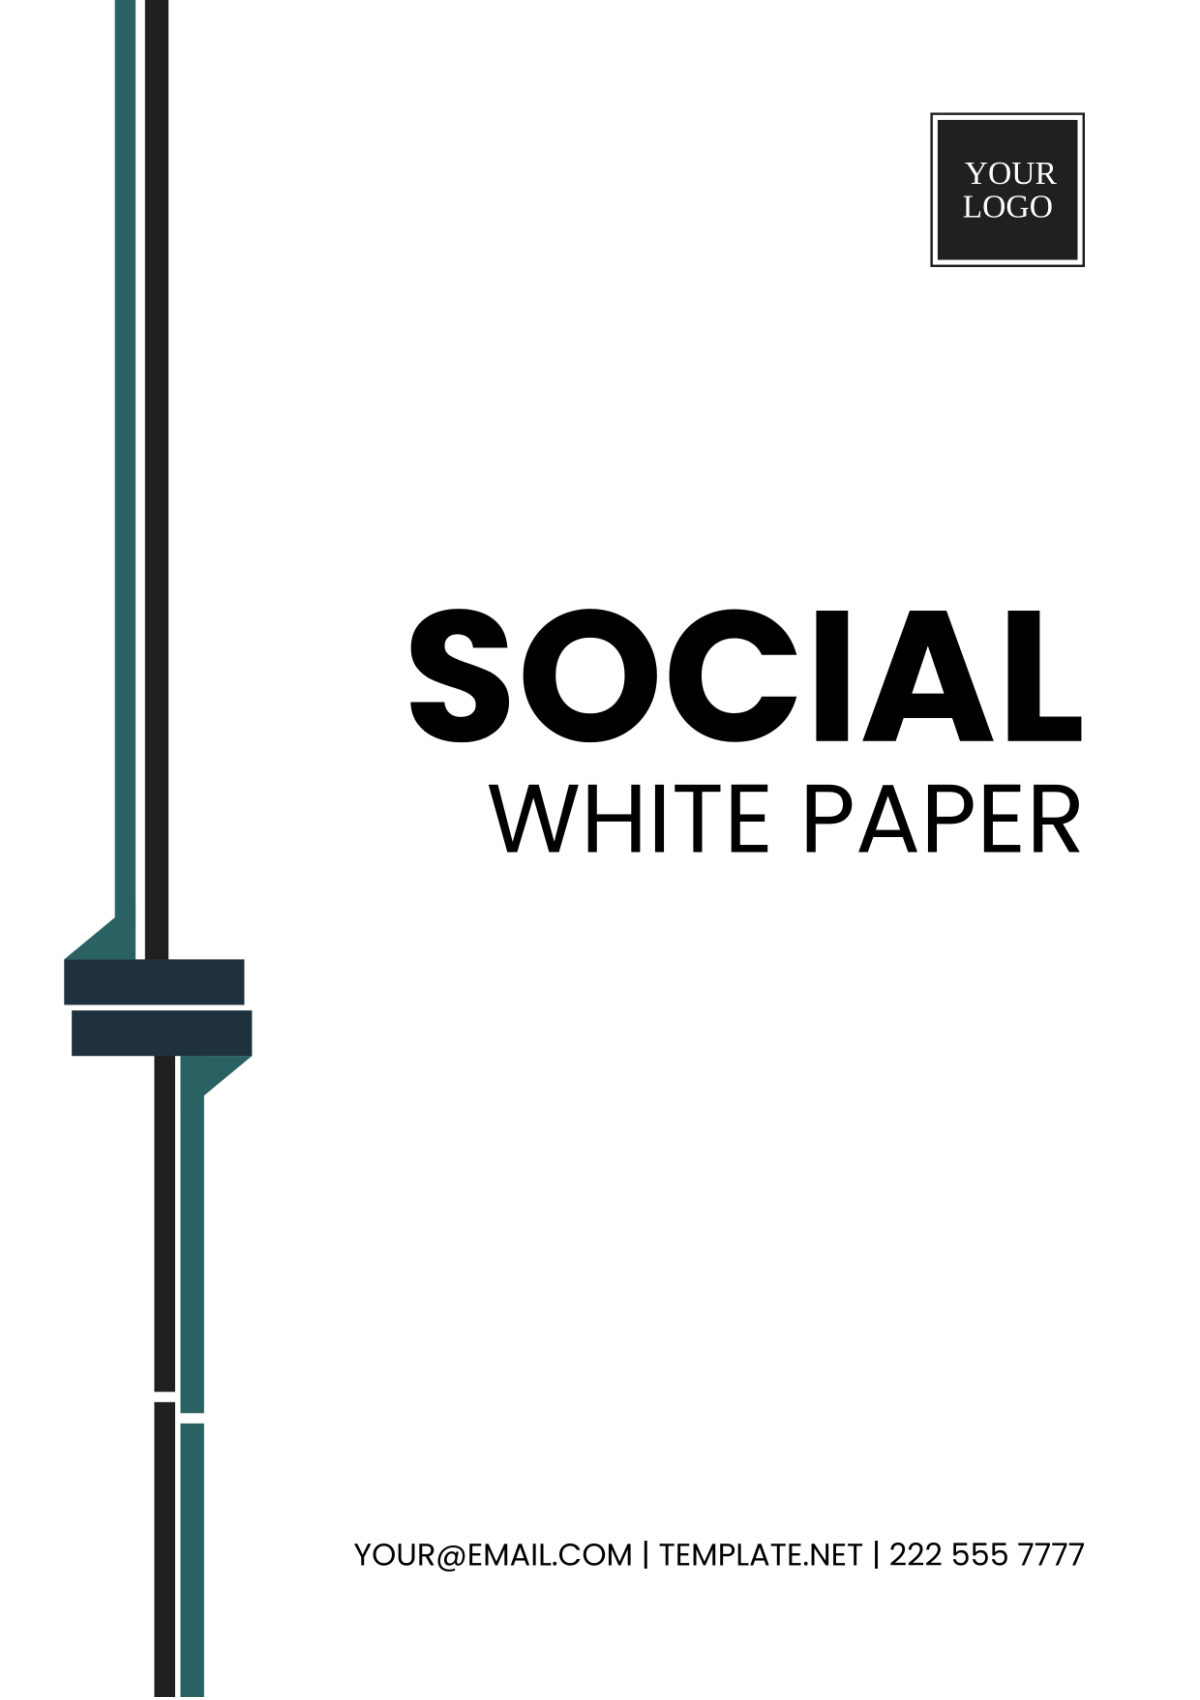 Social White Paper Template